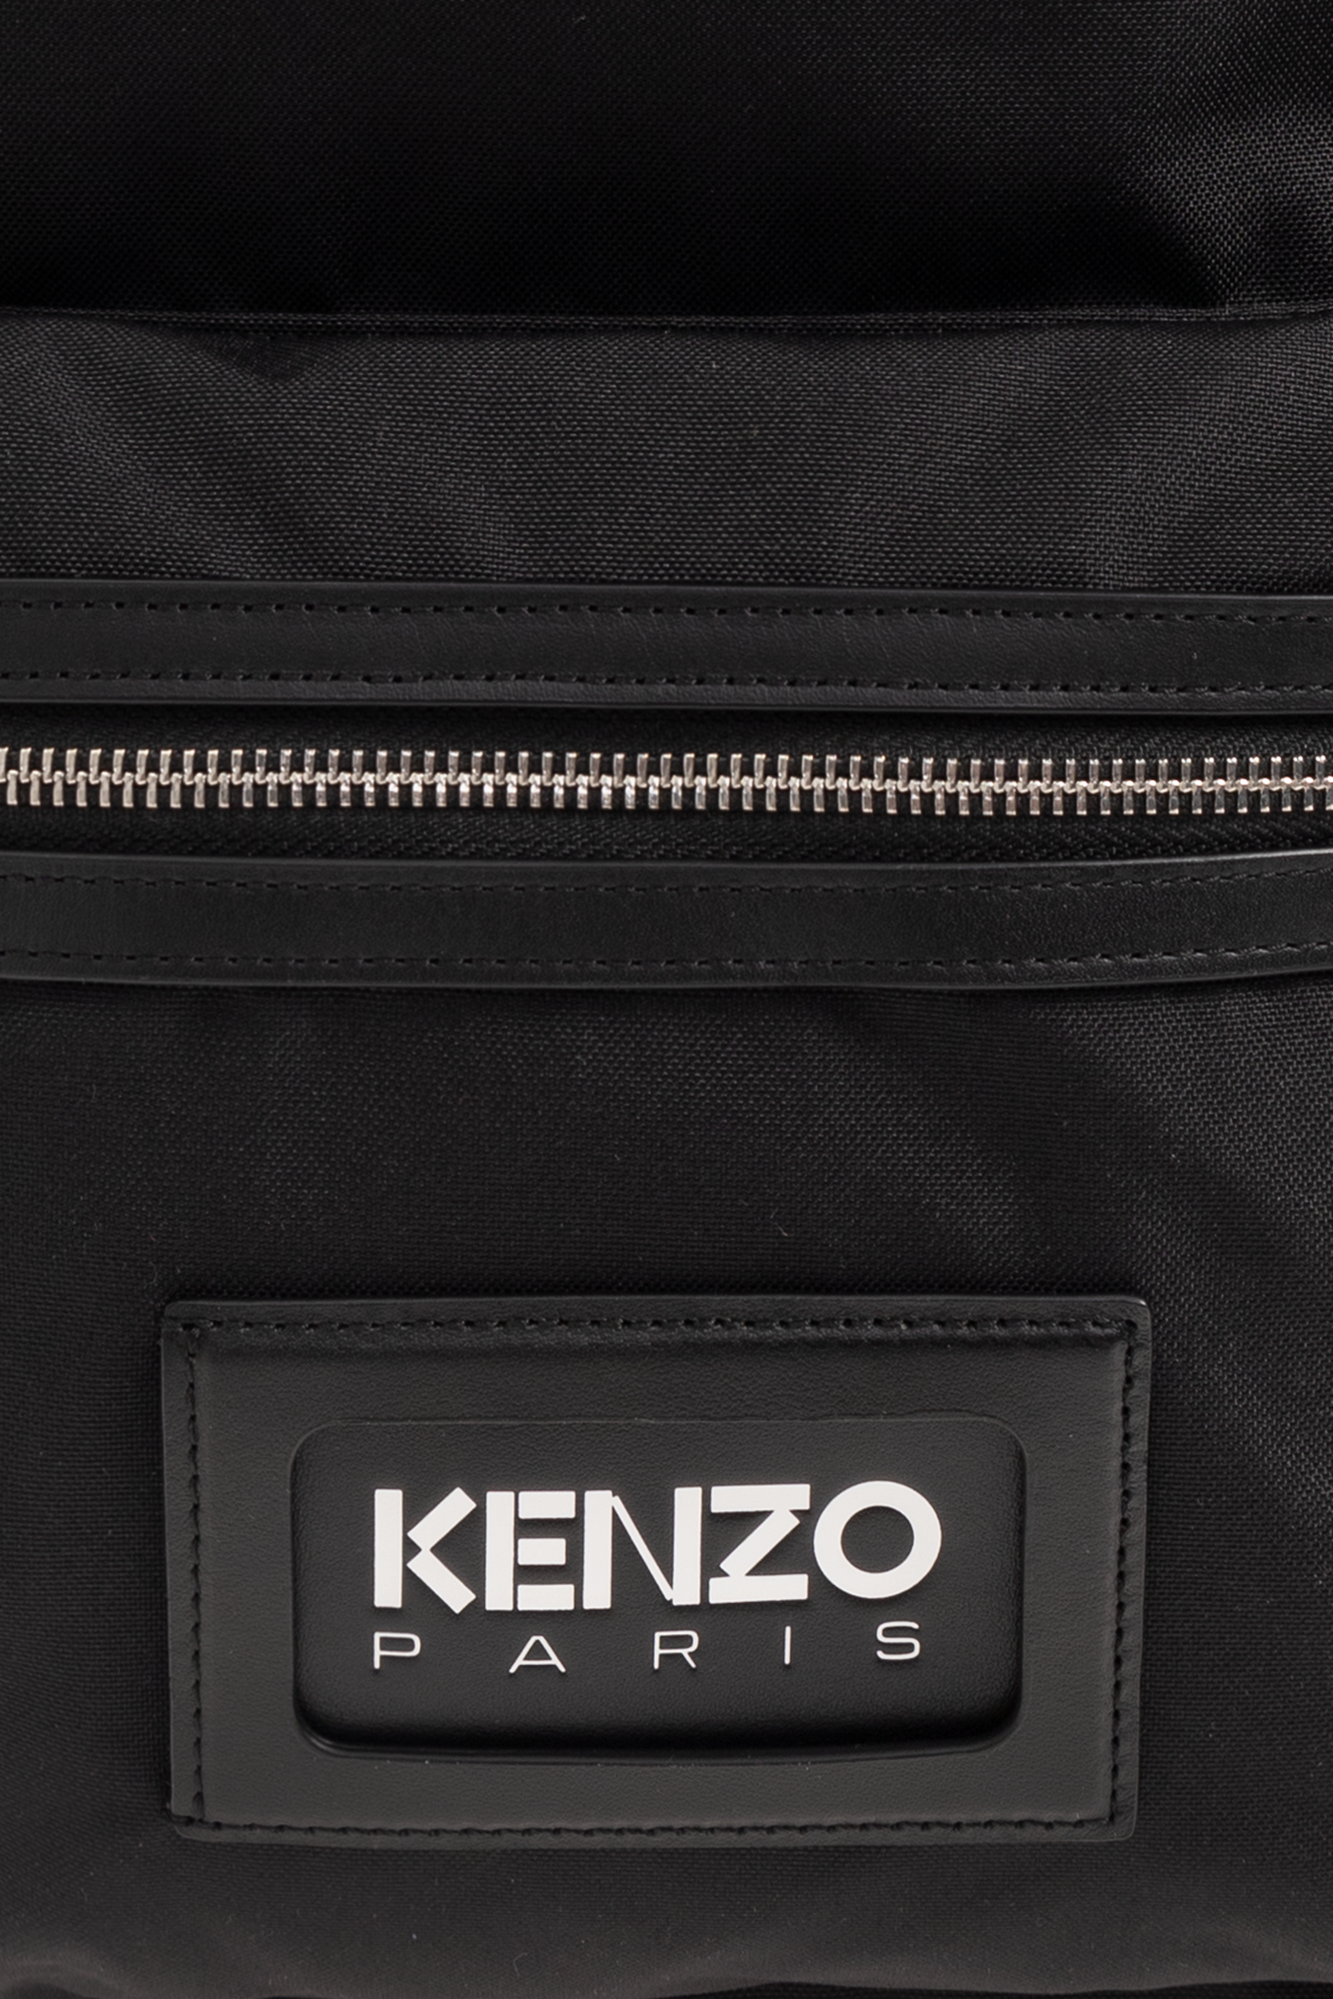 Kenzo and that Ganni bag